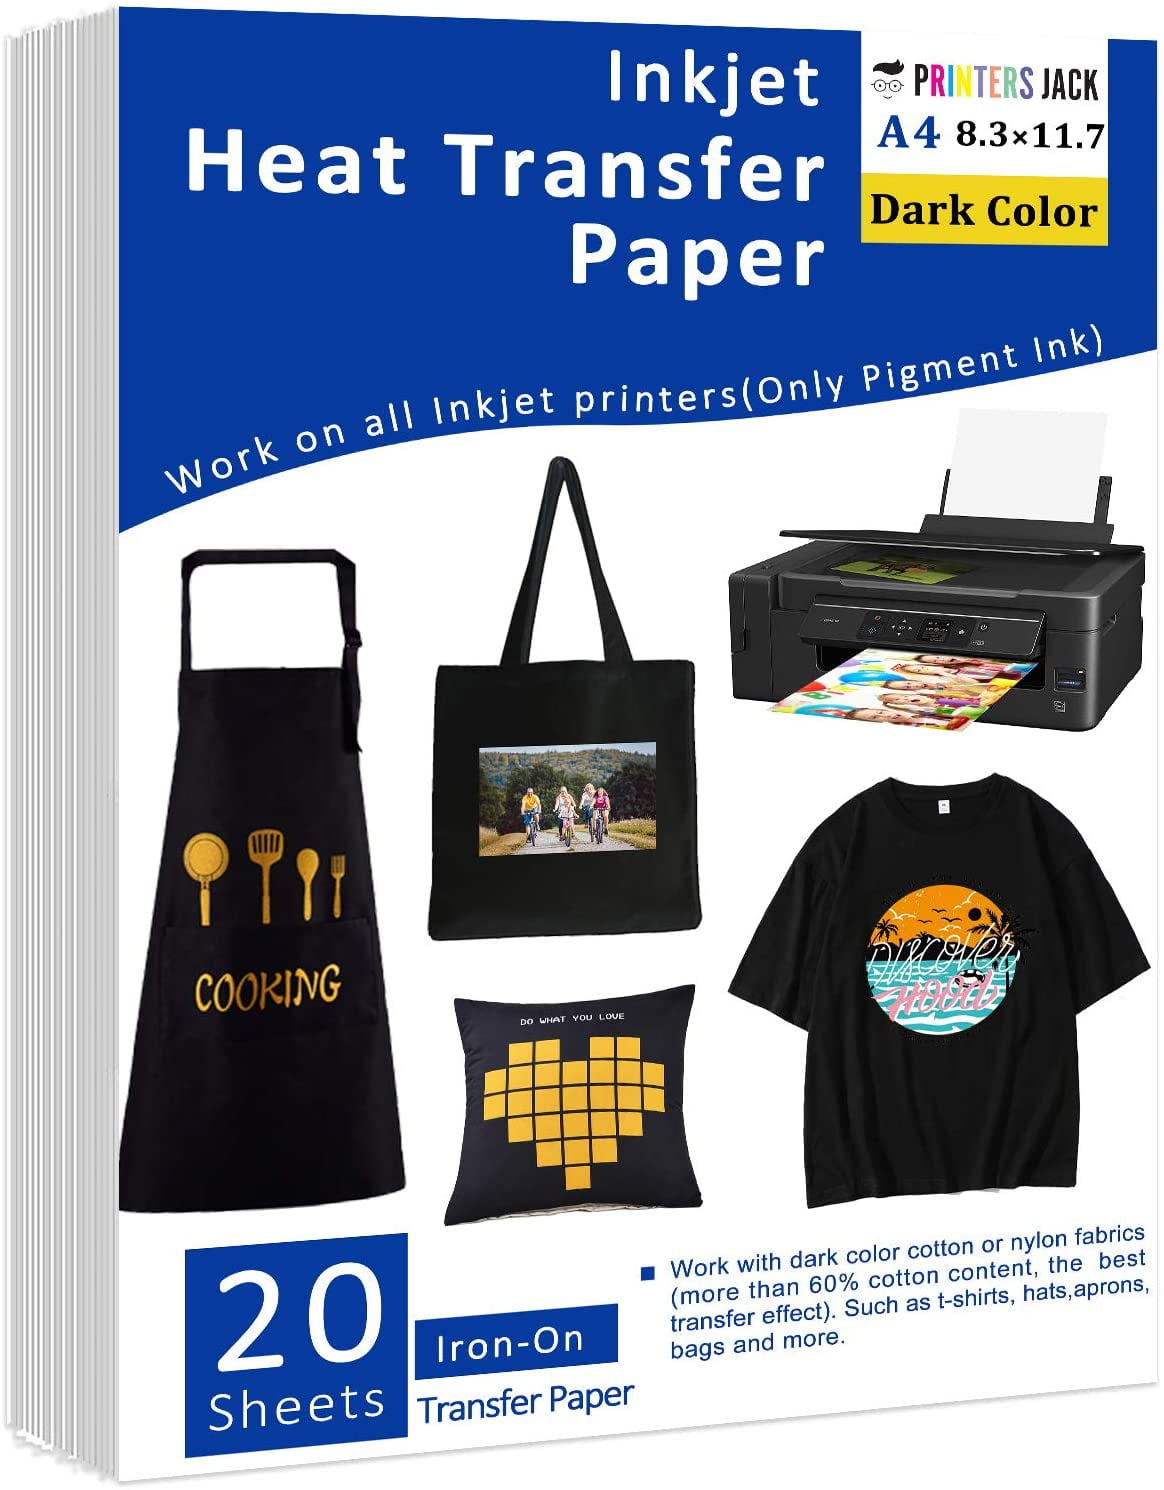 heat transfer paper for inkjet printers - Best Buy